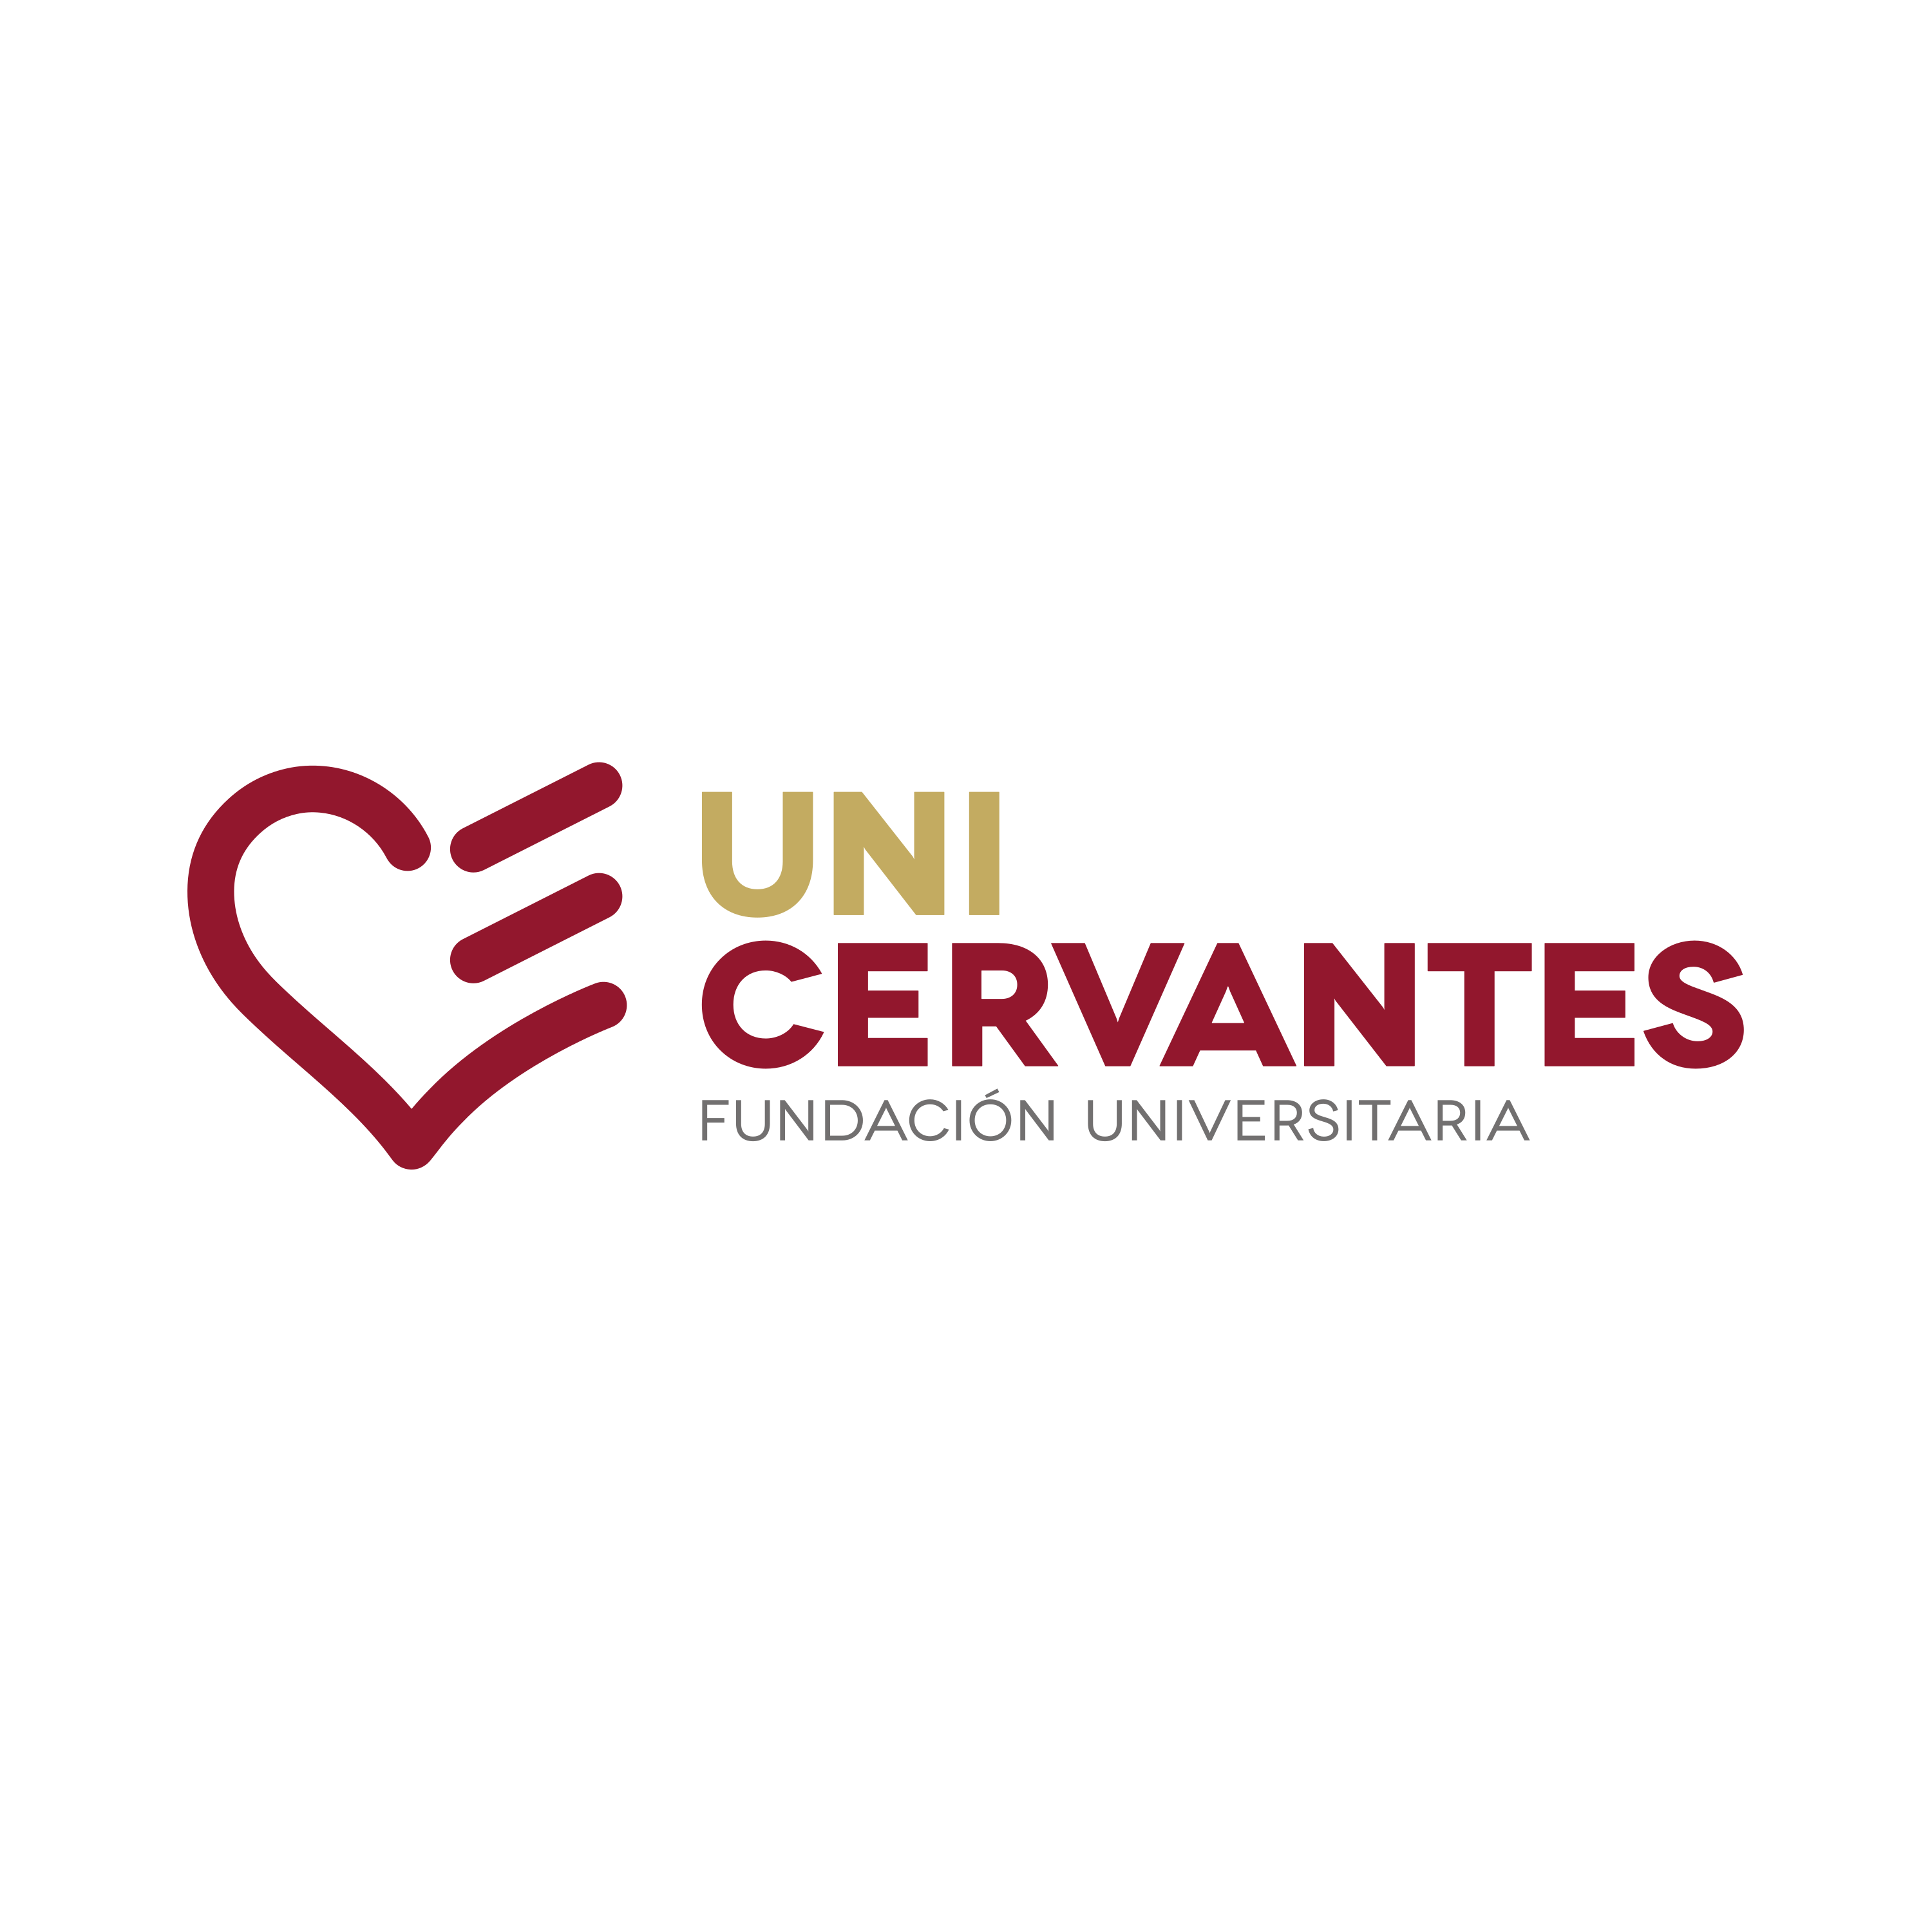 Unicervantes Logo  Transparent Image